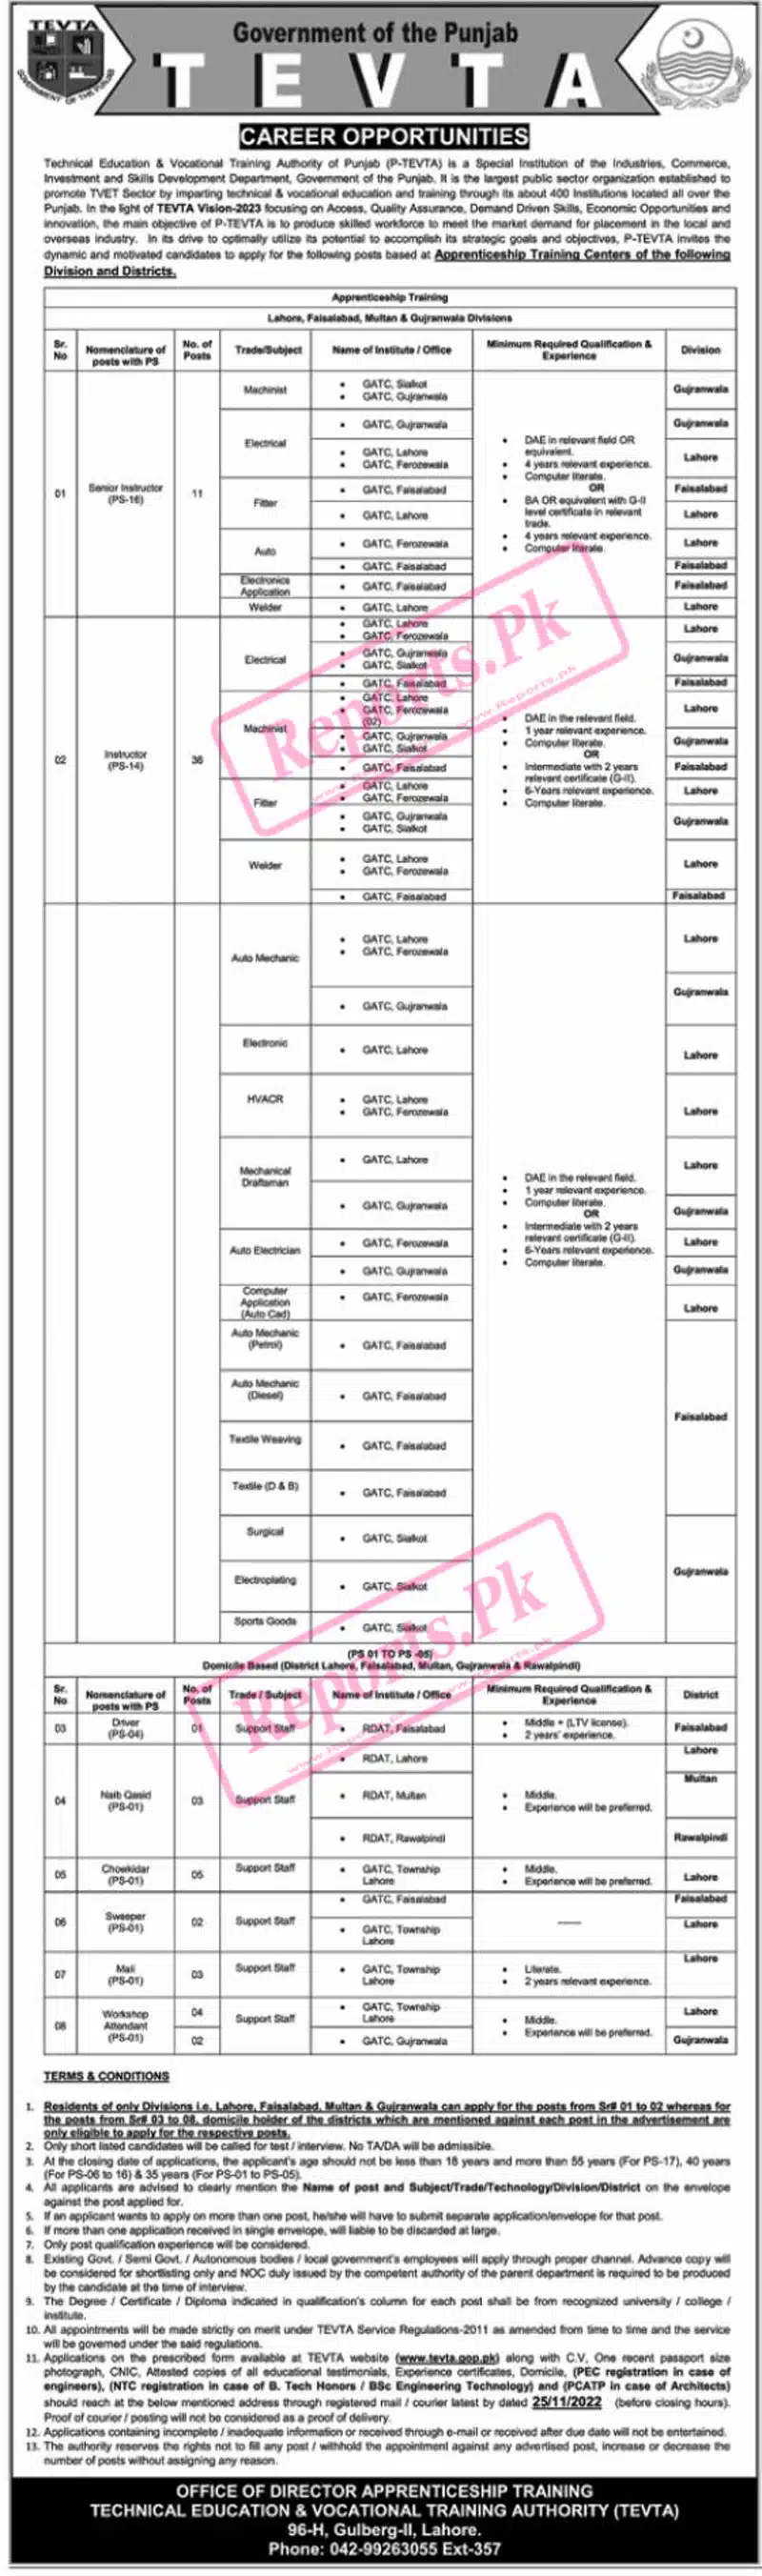 TEVTA Vacancies in Lahore, Faisalabad, Multan, and Gujranwala